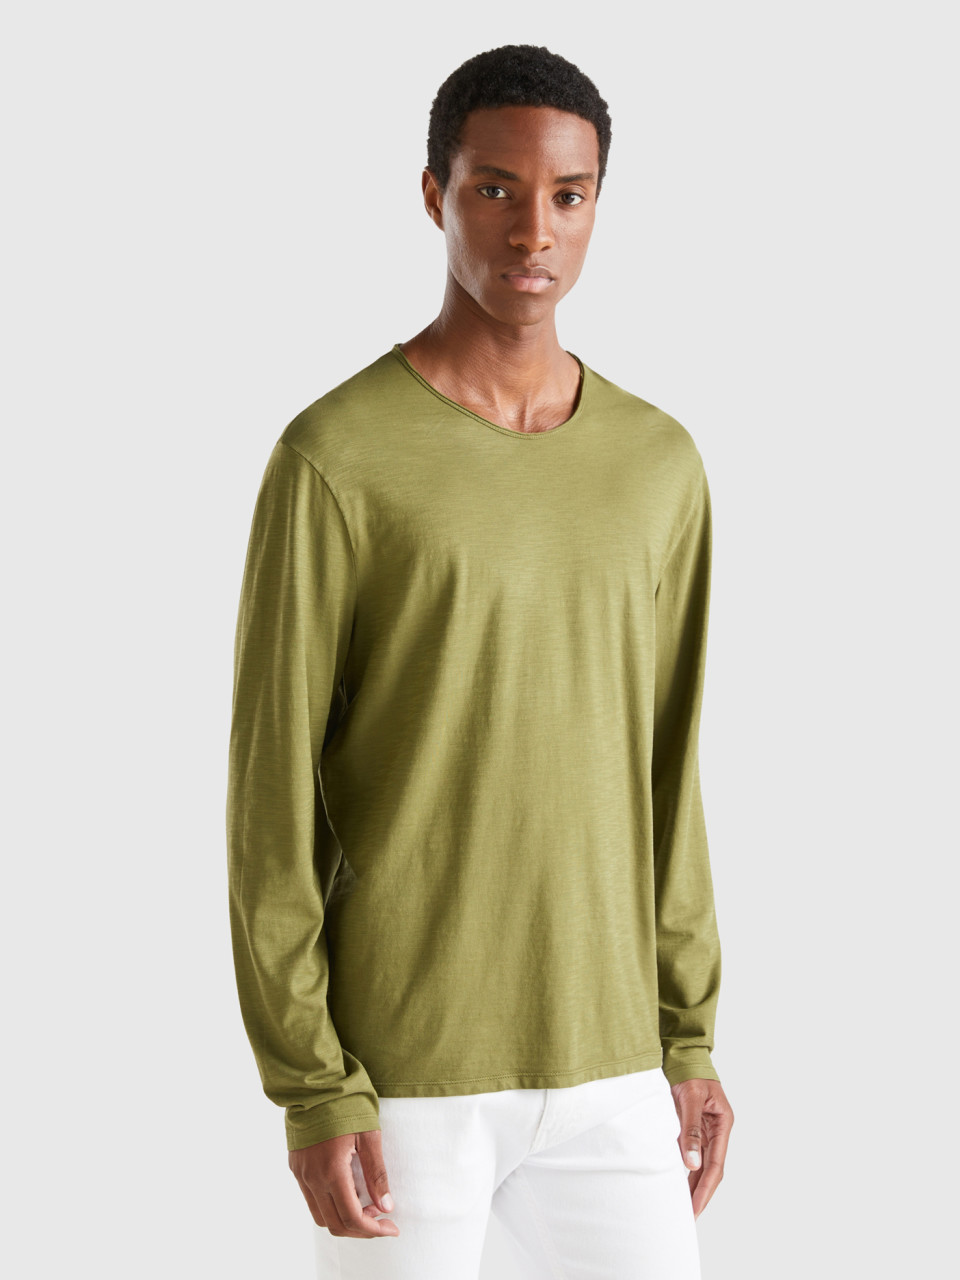 Benetton, Long Sleeve T-shirt In 100% Cotton, Military Green, Men